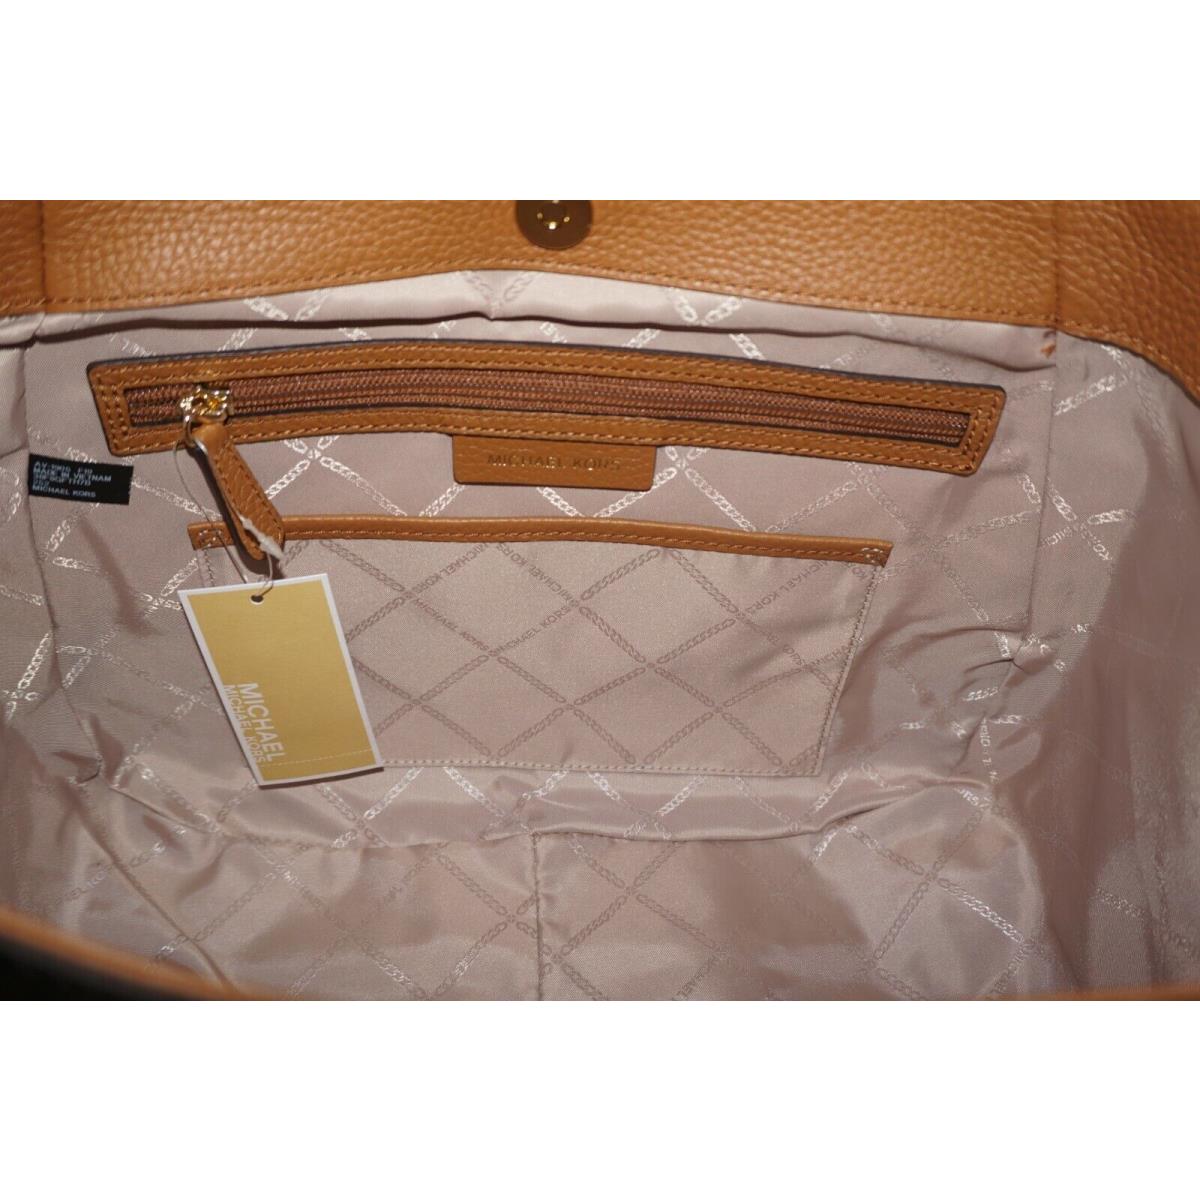 Michael Kors  bag   - Brown/Acorn Exterior, Beige Lining, Gold Hardware 5